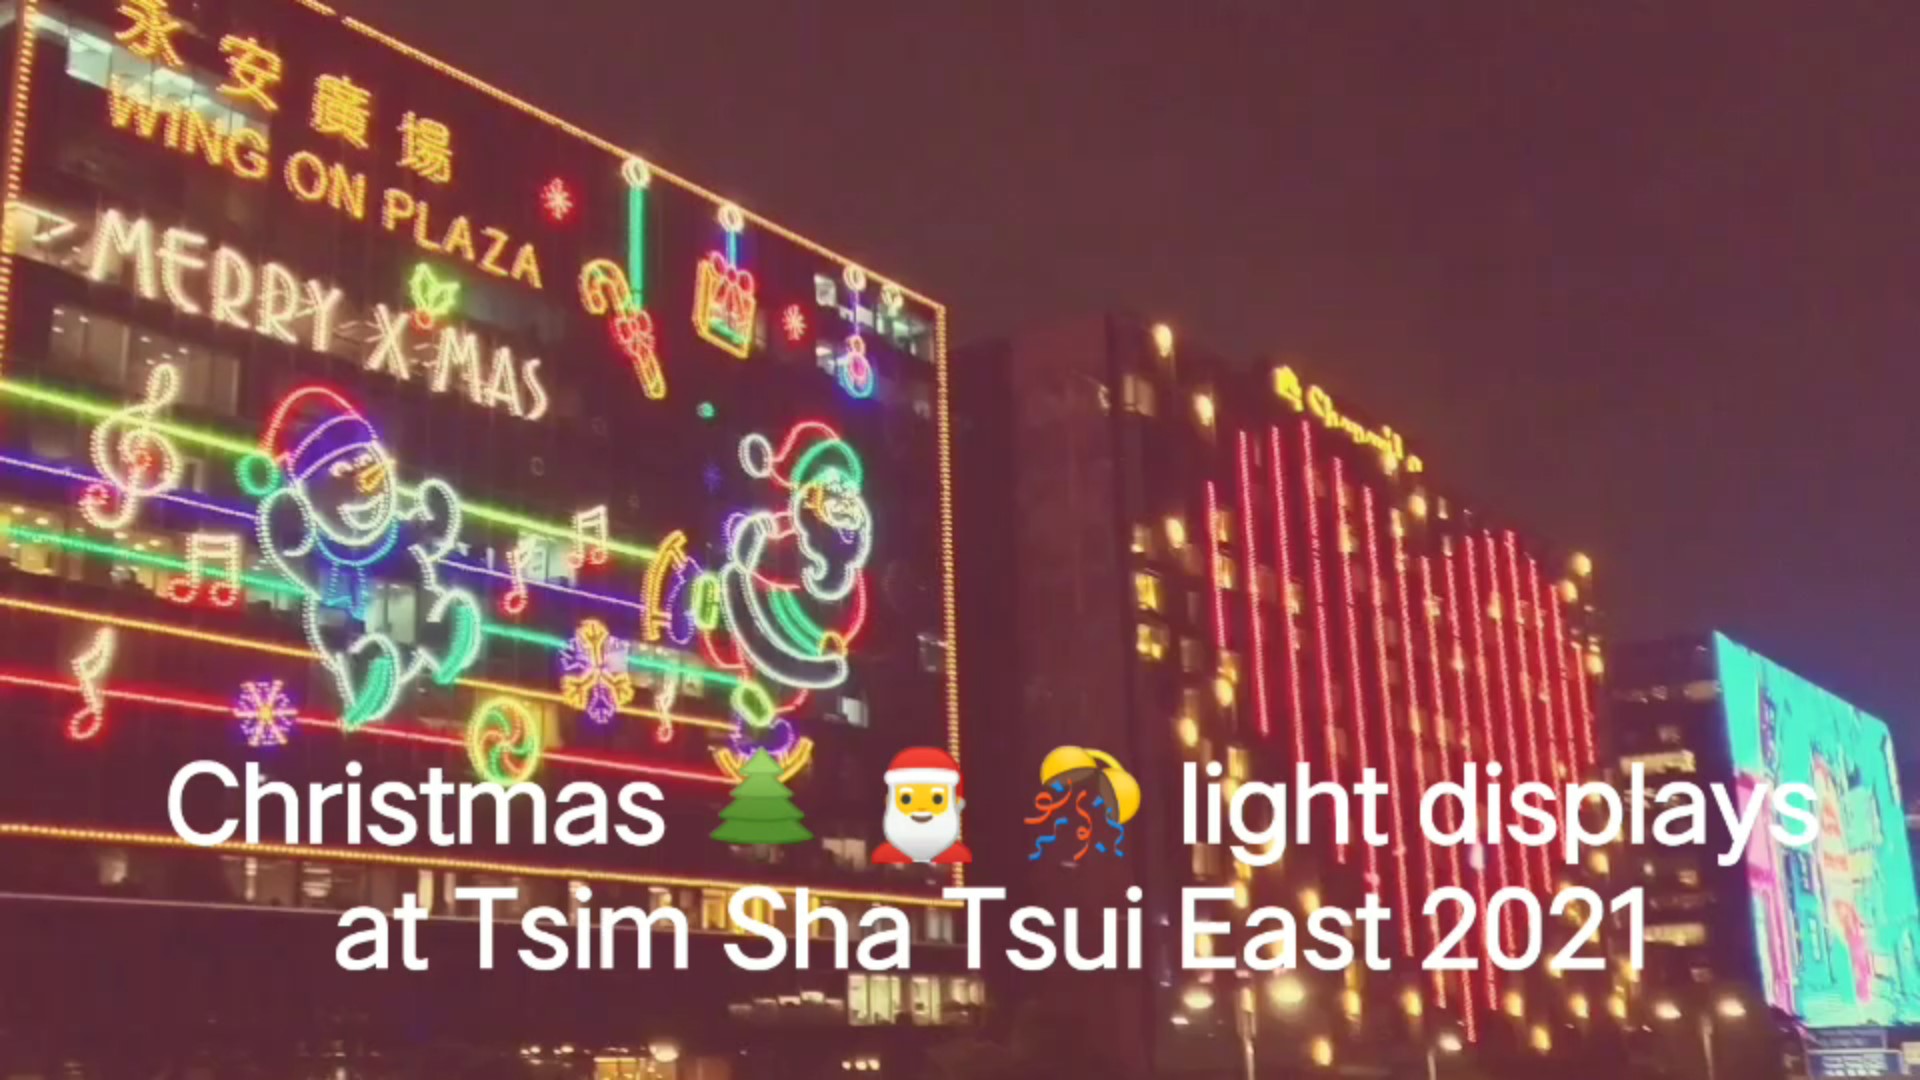 “Christmas light displays at Tsim Sha Tsui East 2021” snapshots video of Frank